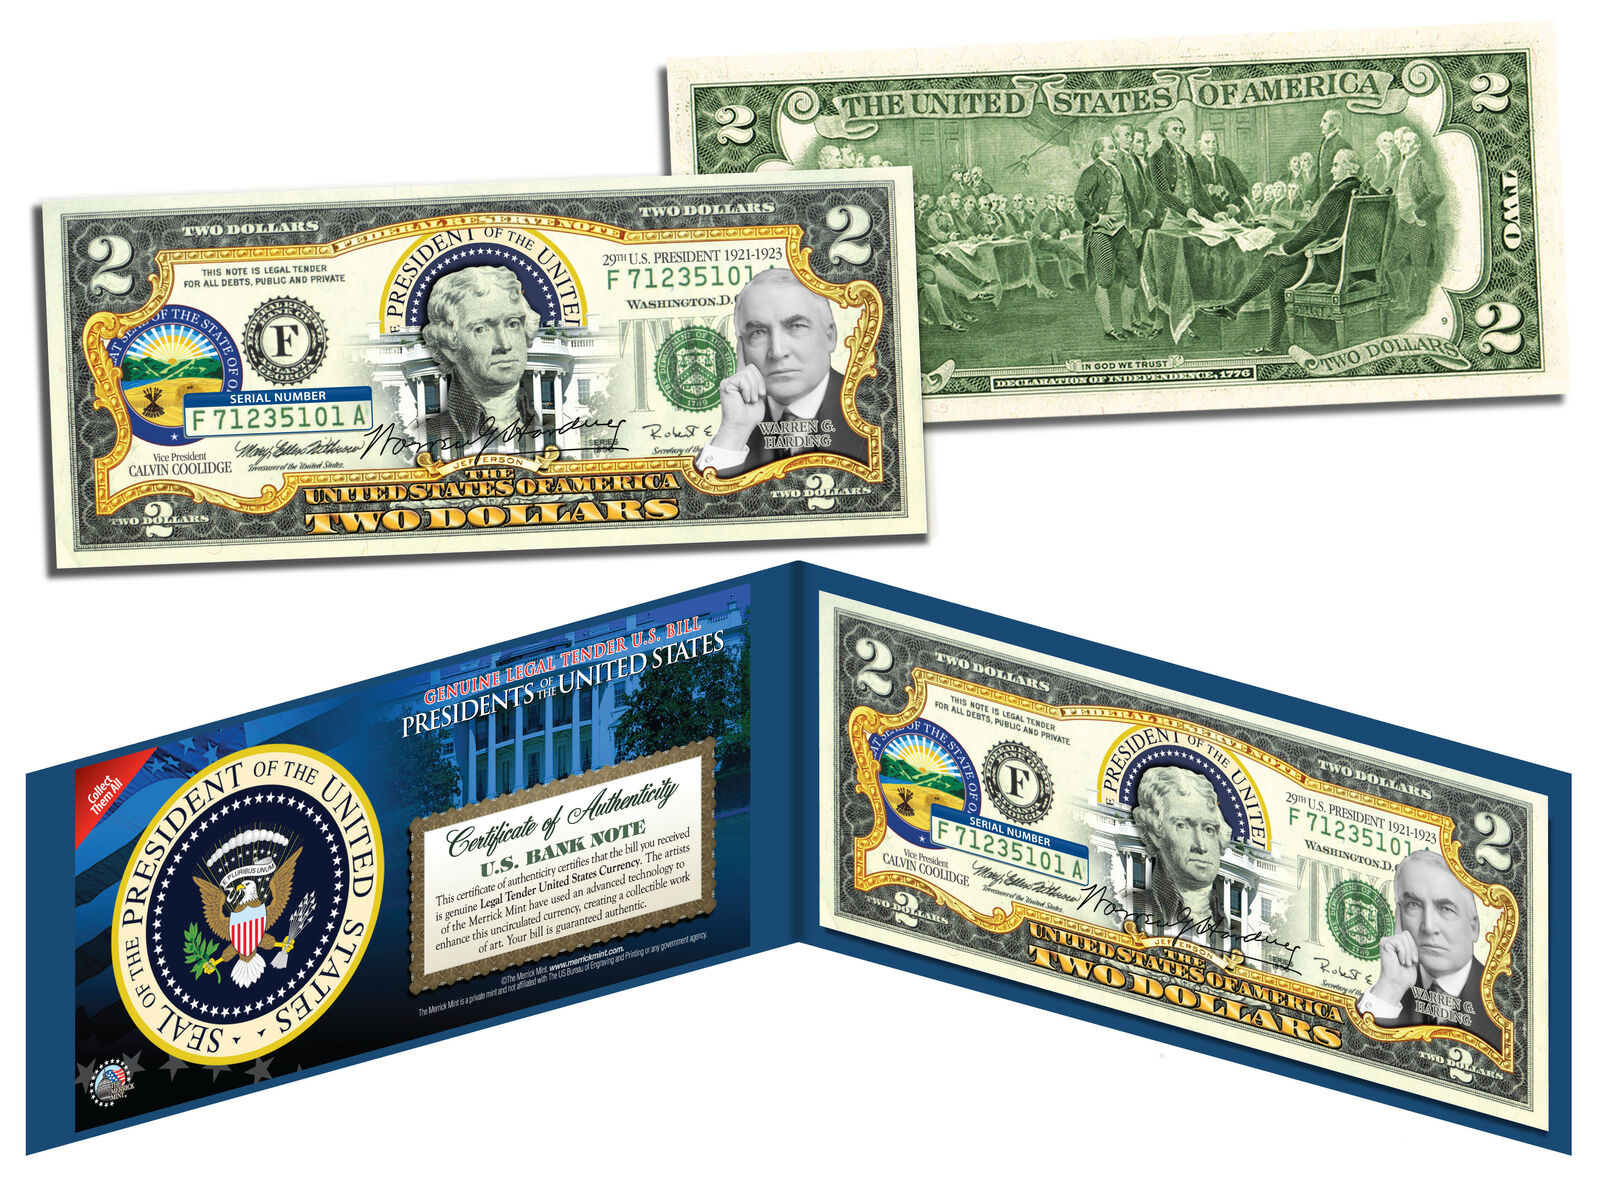 WARREN G HARDING * 29th U.S. President * Colorized $2 Bill Genuine Legal Tender